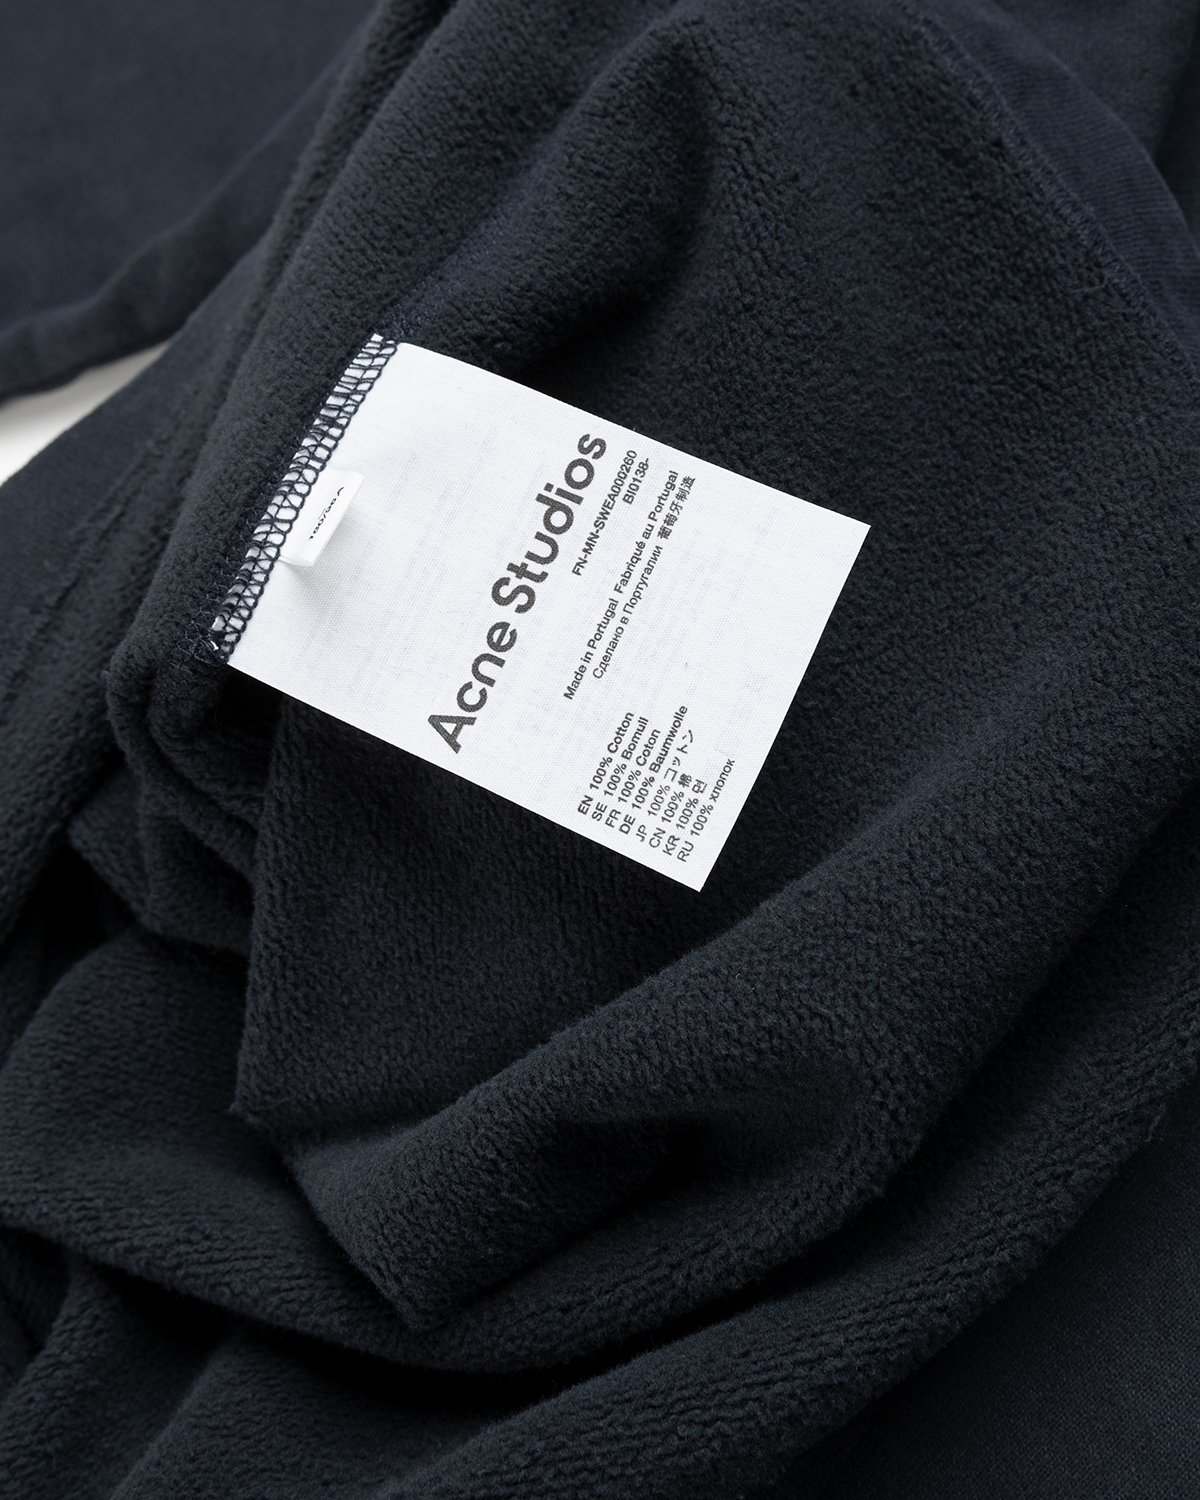 Acne Studios - Organic Cotton Logo Crewneck Sweatshirt Black - Clothing - Black - Image 5